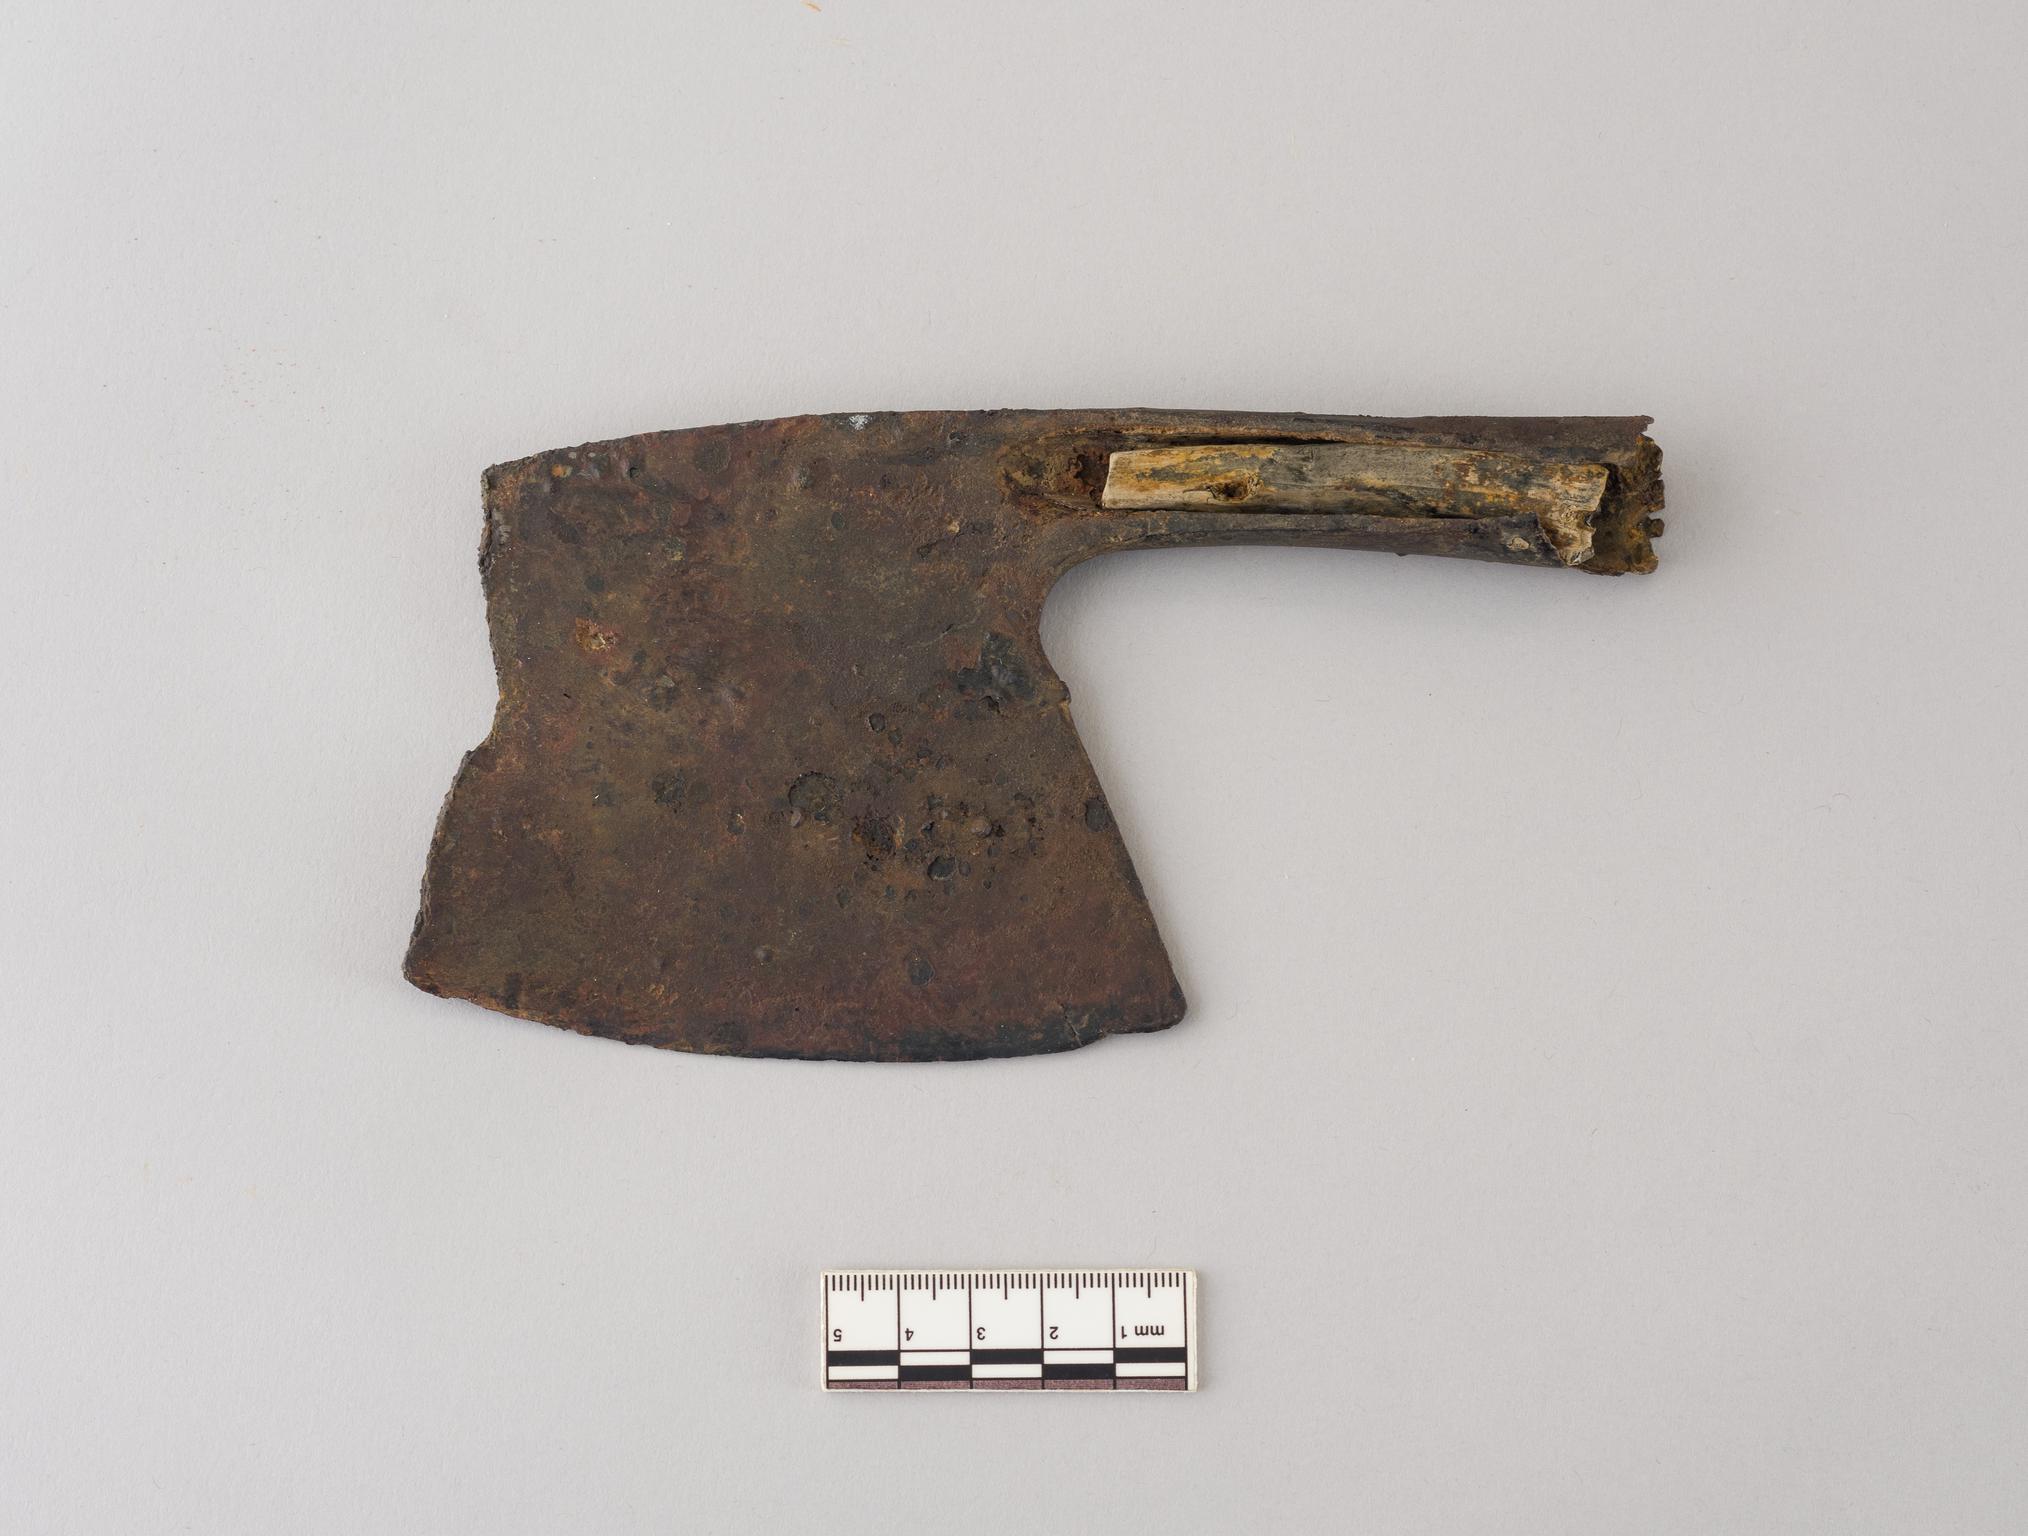 Roman iron cleaver